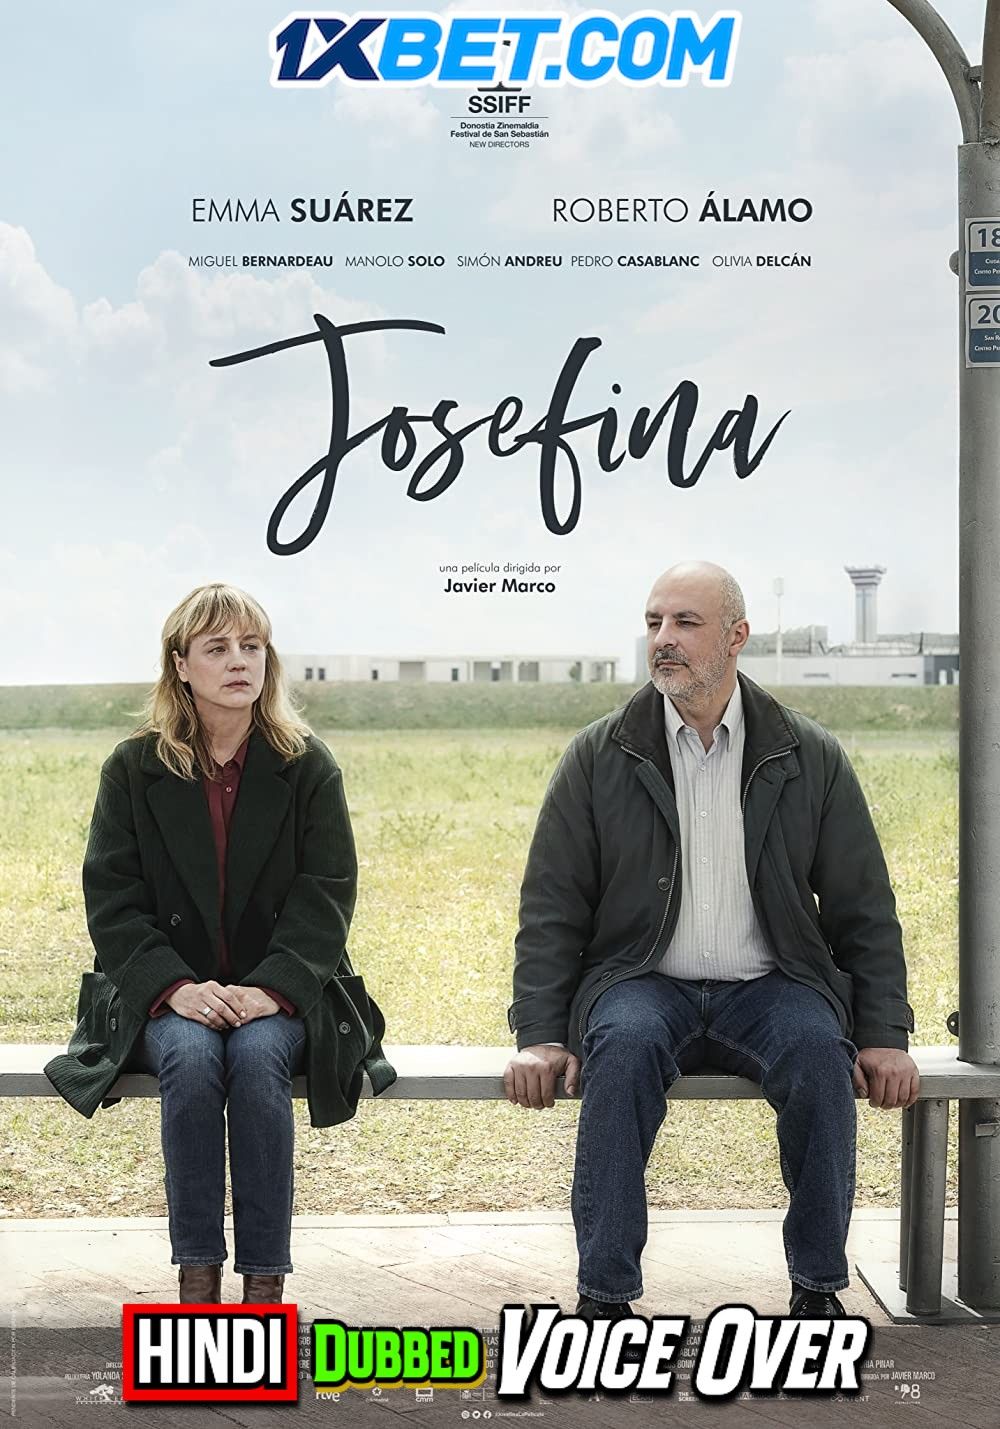 Josefina (2021) Hindi (Voice Over) Dubbed CAMRip download full movie